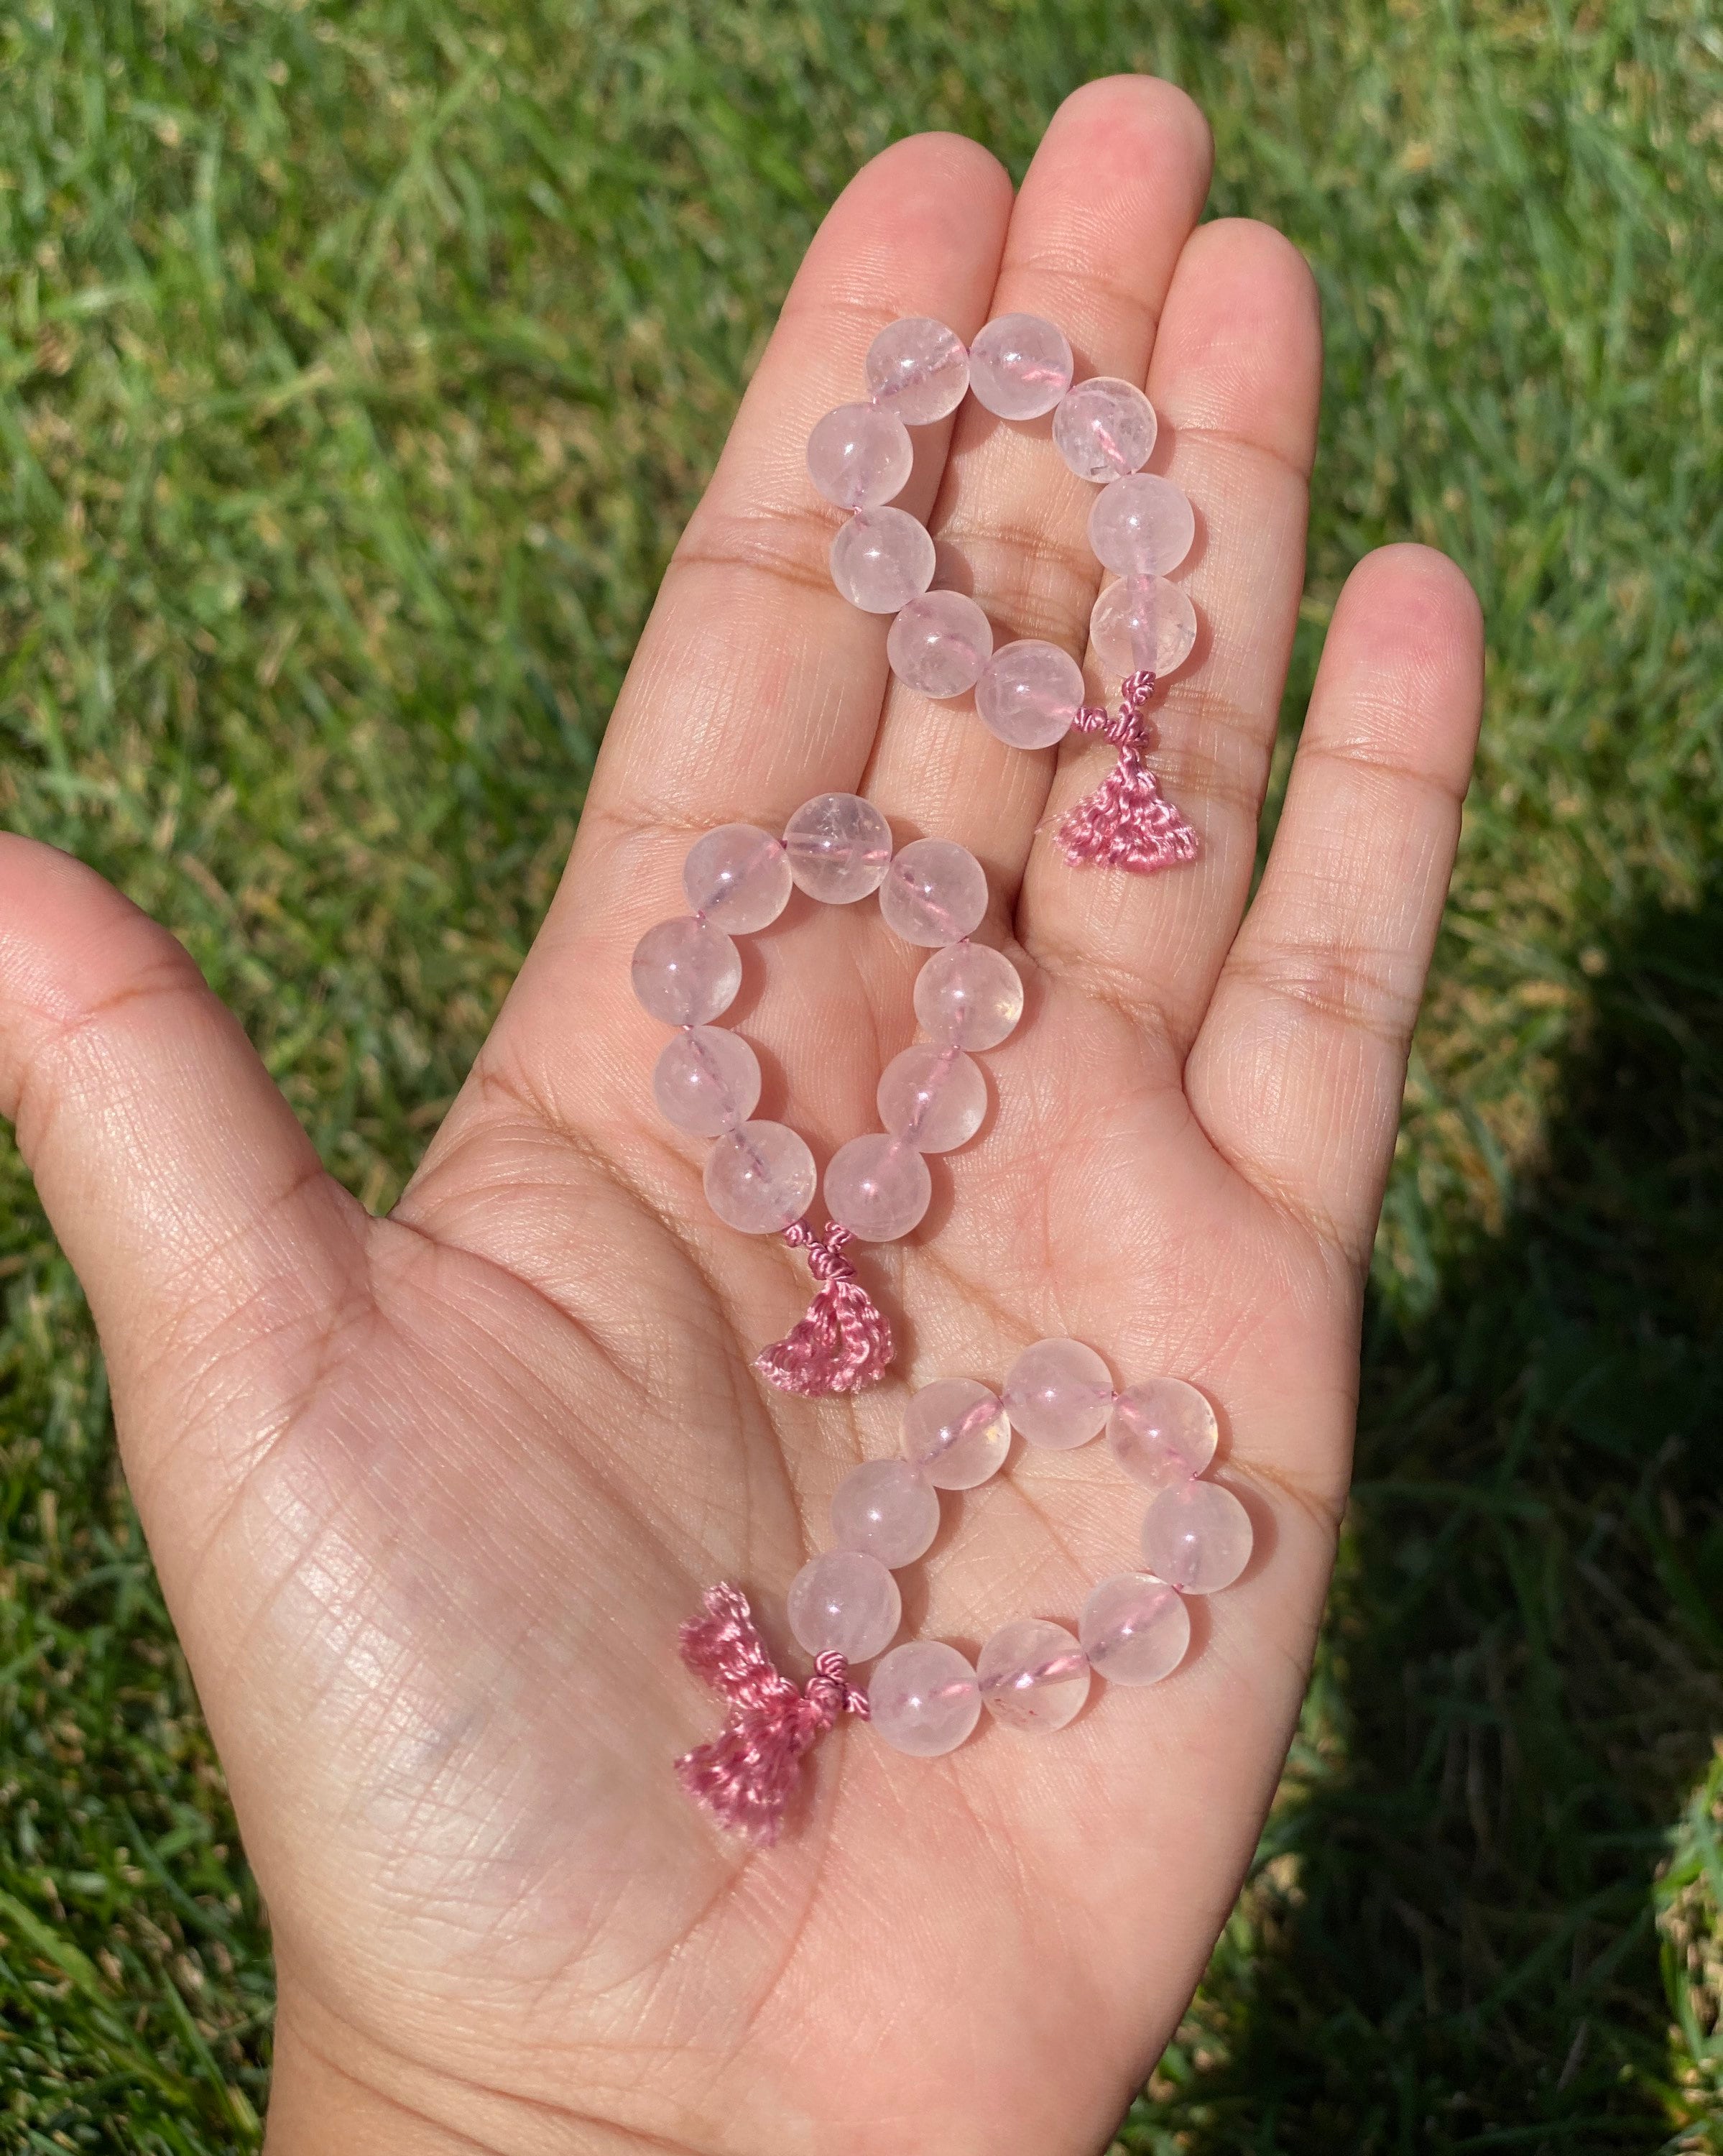 Gemstone Finger Mala 9 Beads, Worry Beads Mini Mala, Aromatherapy Fidget  Beads, Stress Relief, Affirmation Beads, Yoga Practice, Yoga Gift 